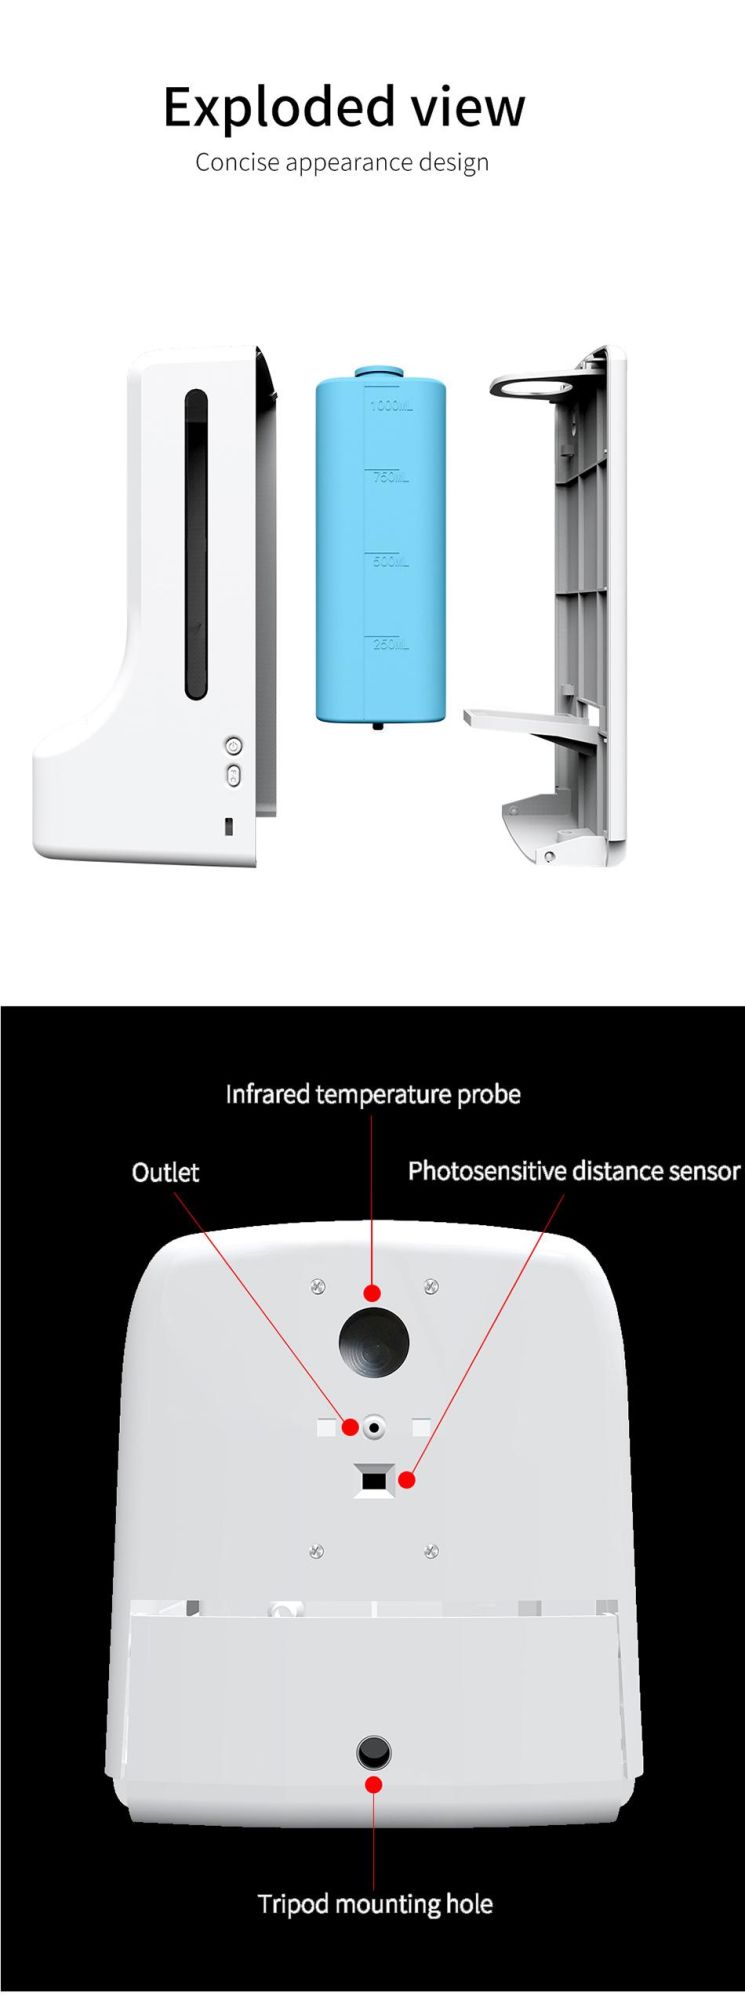 Spanish Voice Hight Temperature Alarm K9 PRO Hand Sanitizer Dispenser